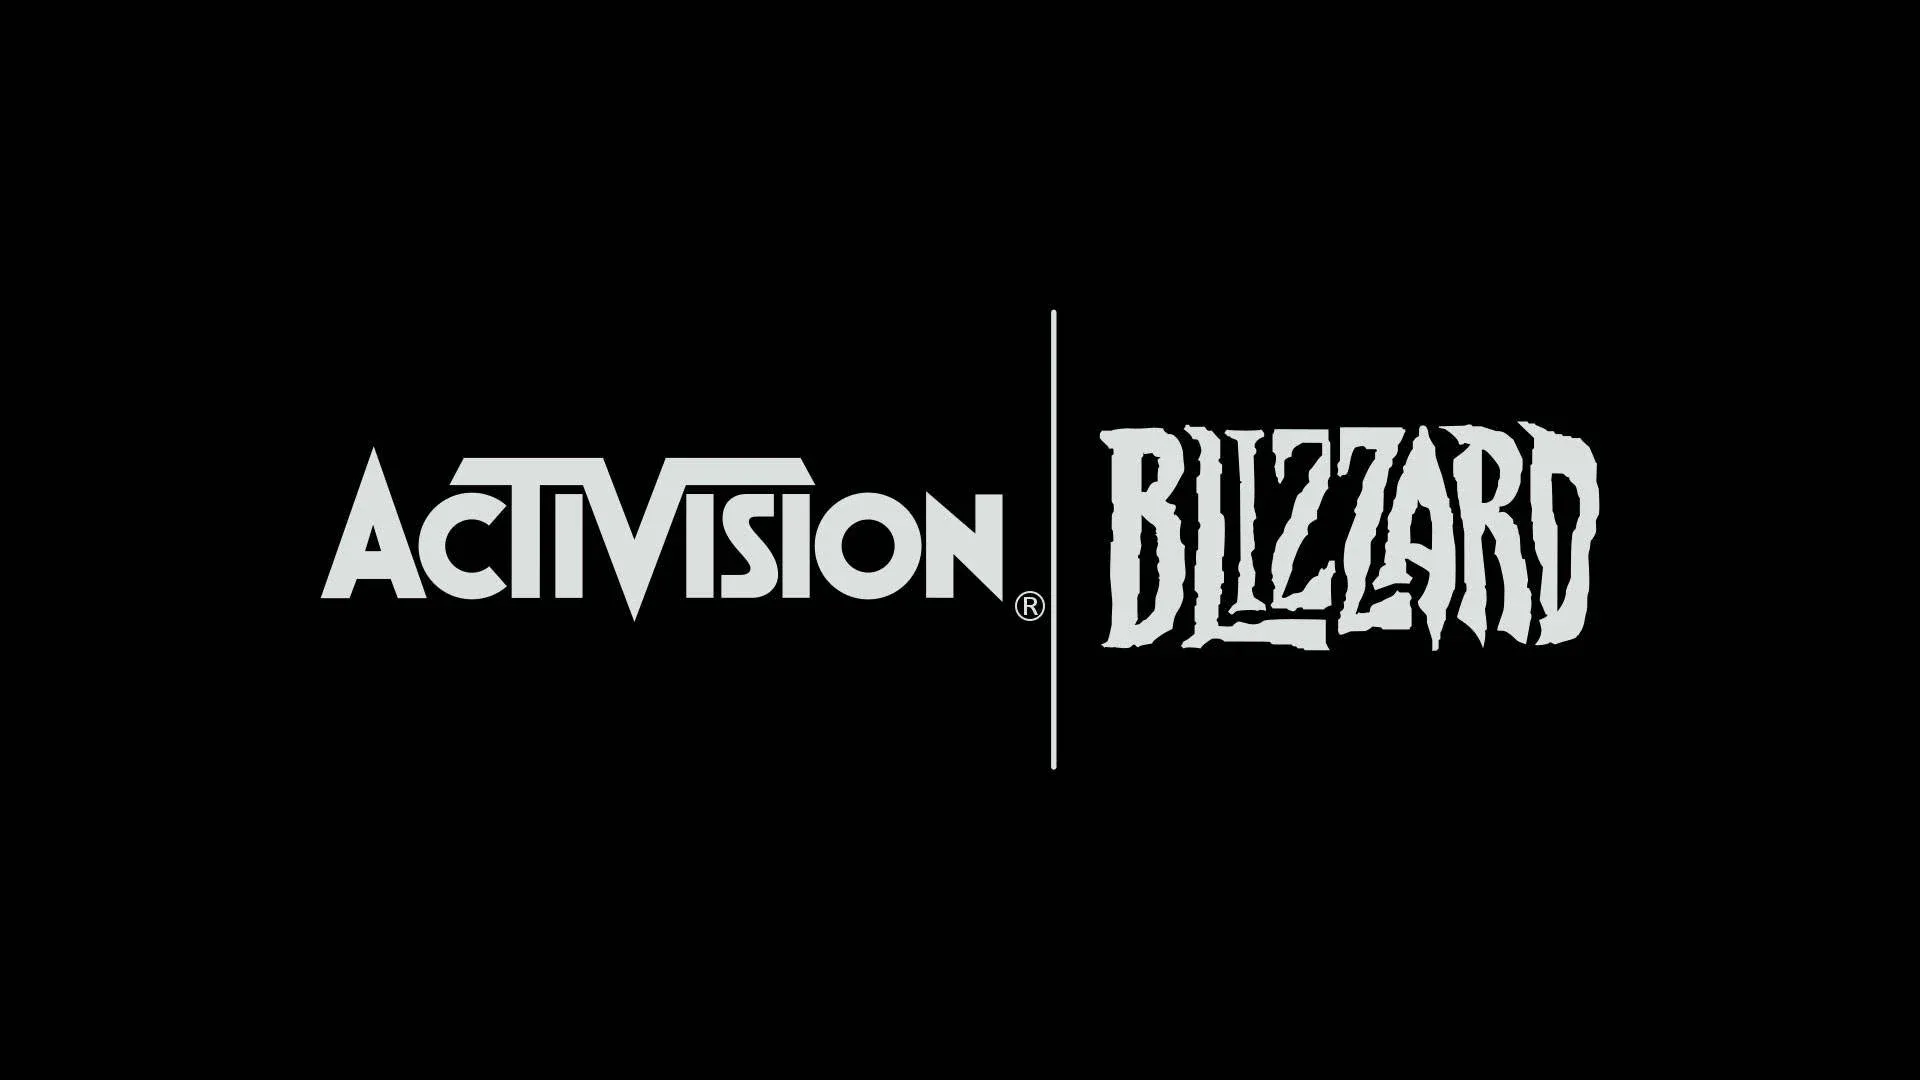 Statement Regarding Activision Blizzard’s CEO